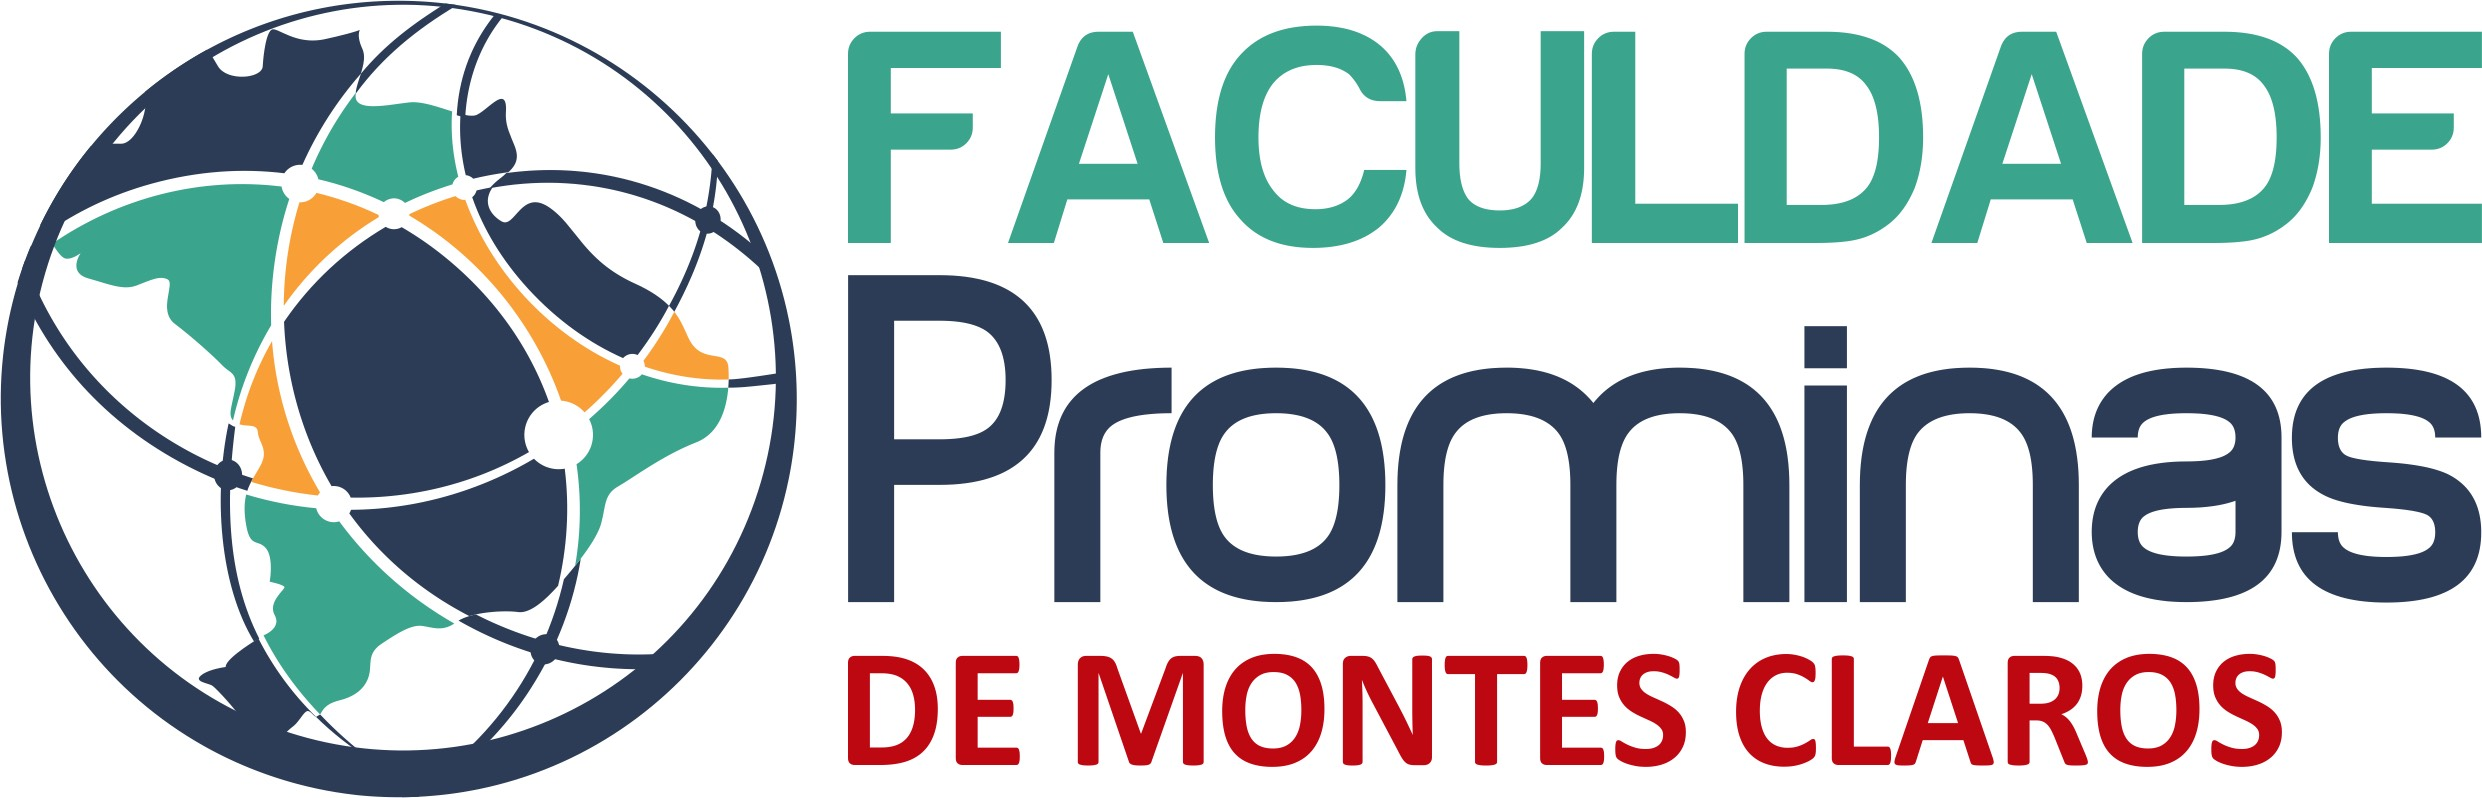 Faculdade Prominas de Montes Claros - PROMINASMOC